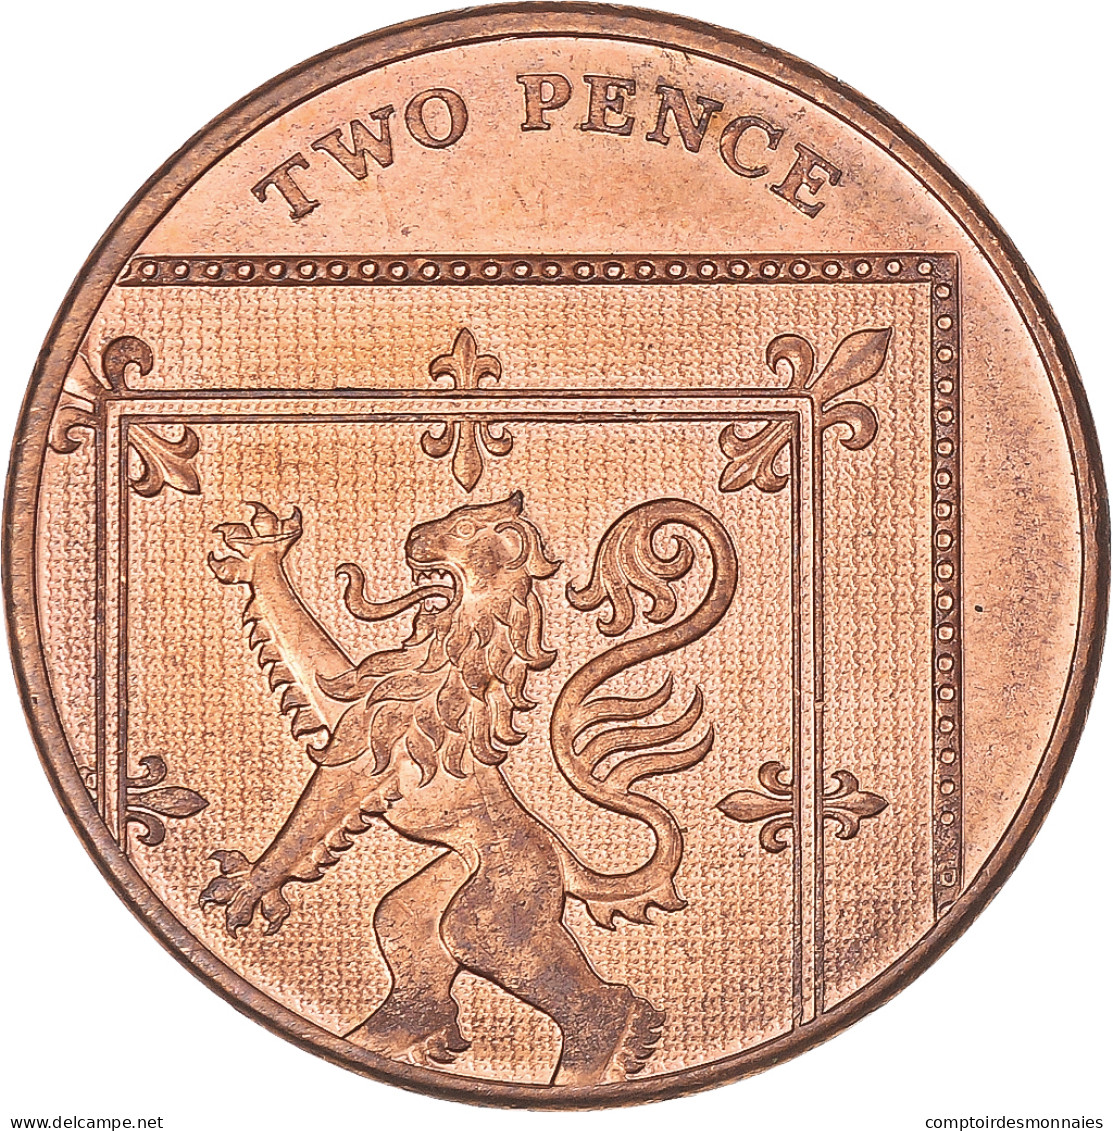 Monnaie, Grande-Bretagne, 2 Pence, 2015 - 2 Pence & 2 New Pence